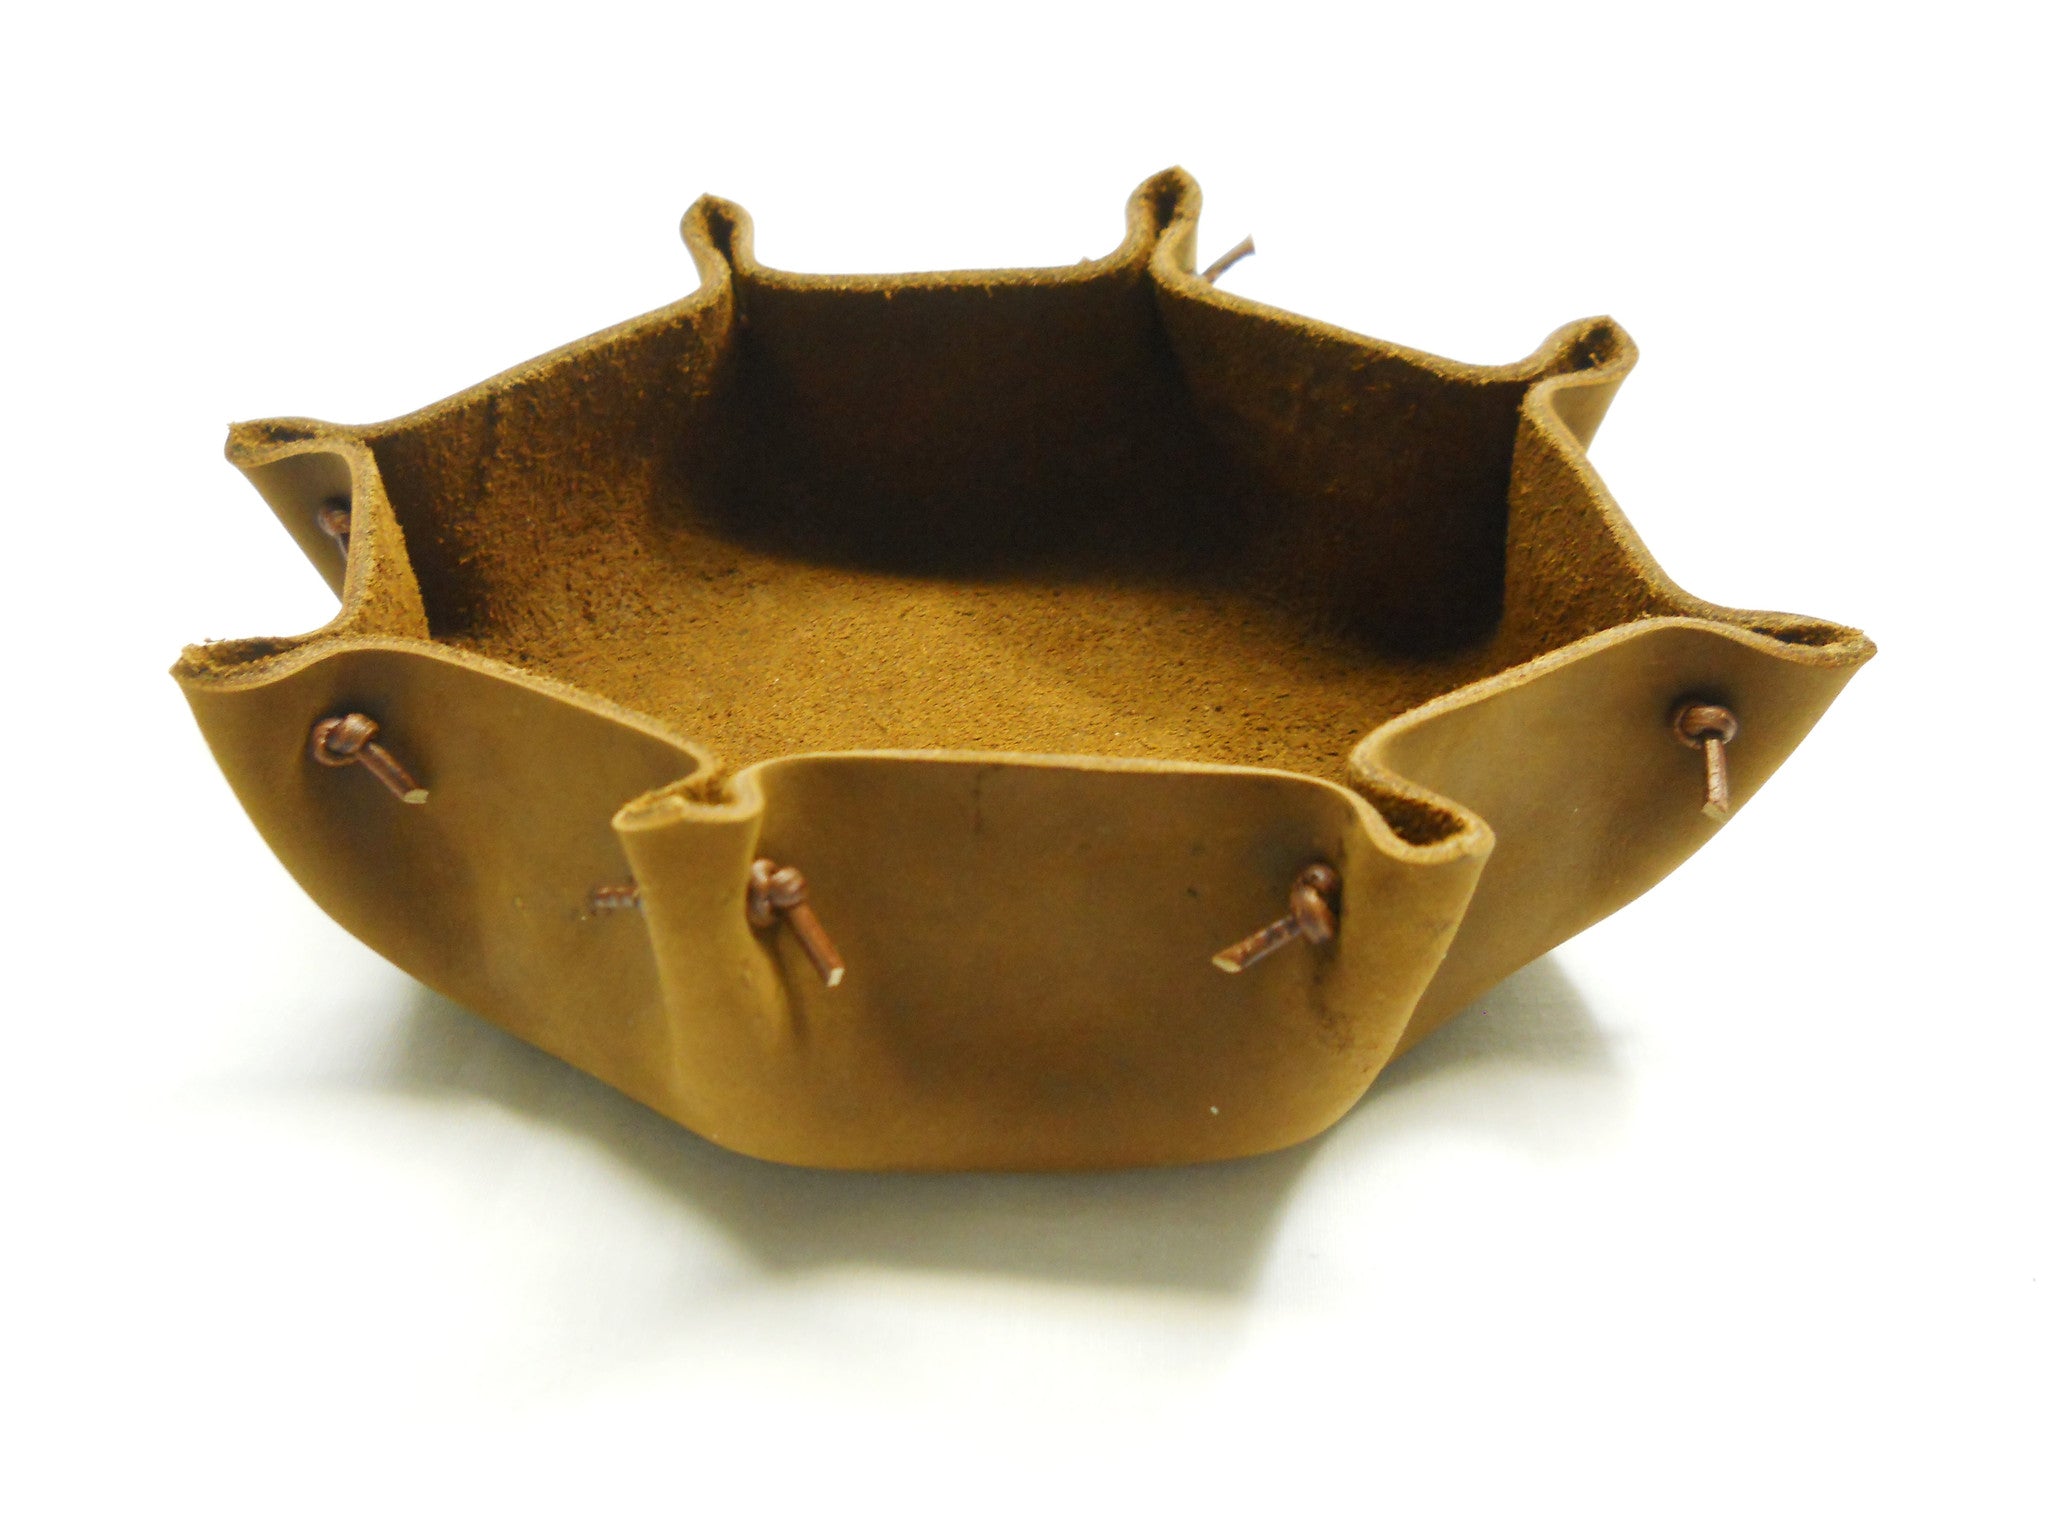 Octagon Bowl